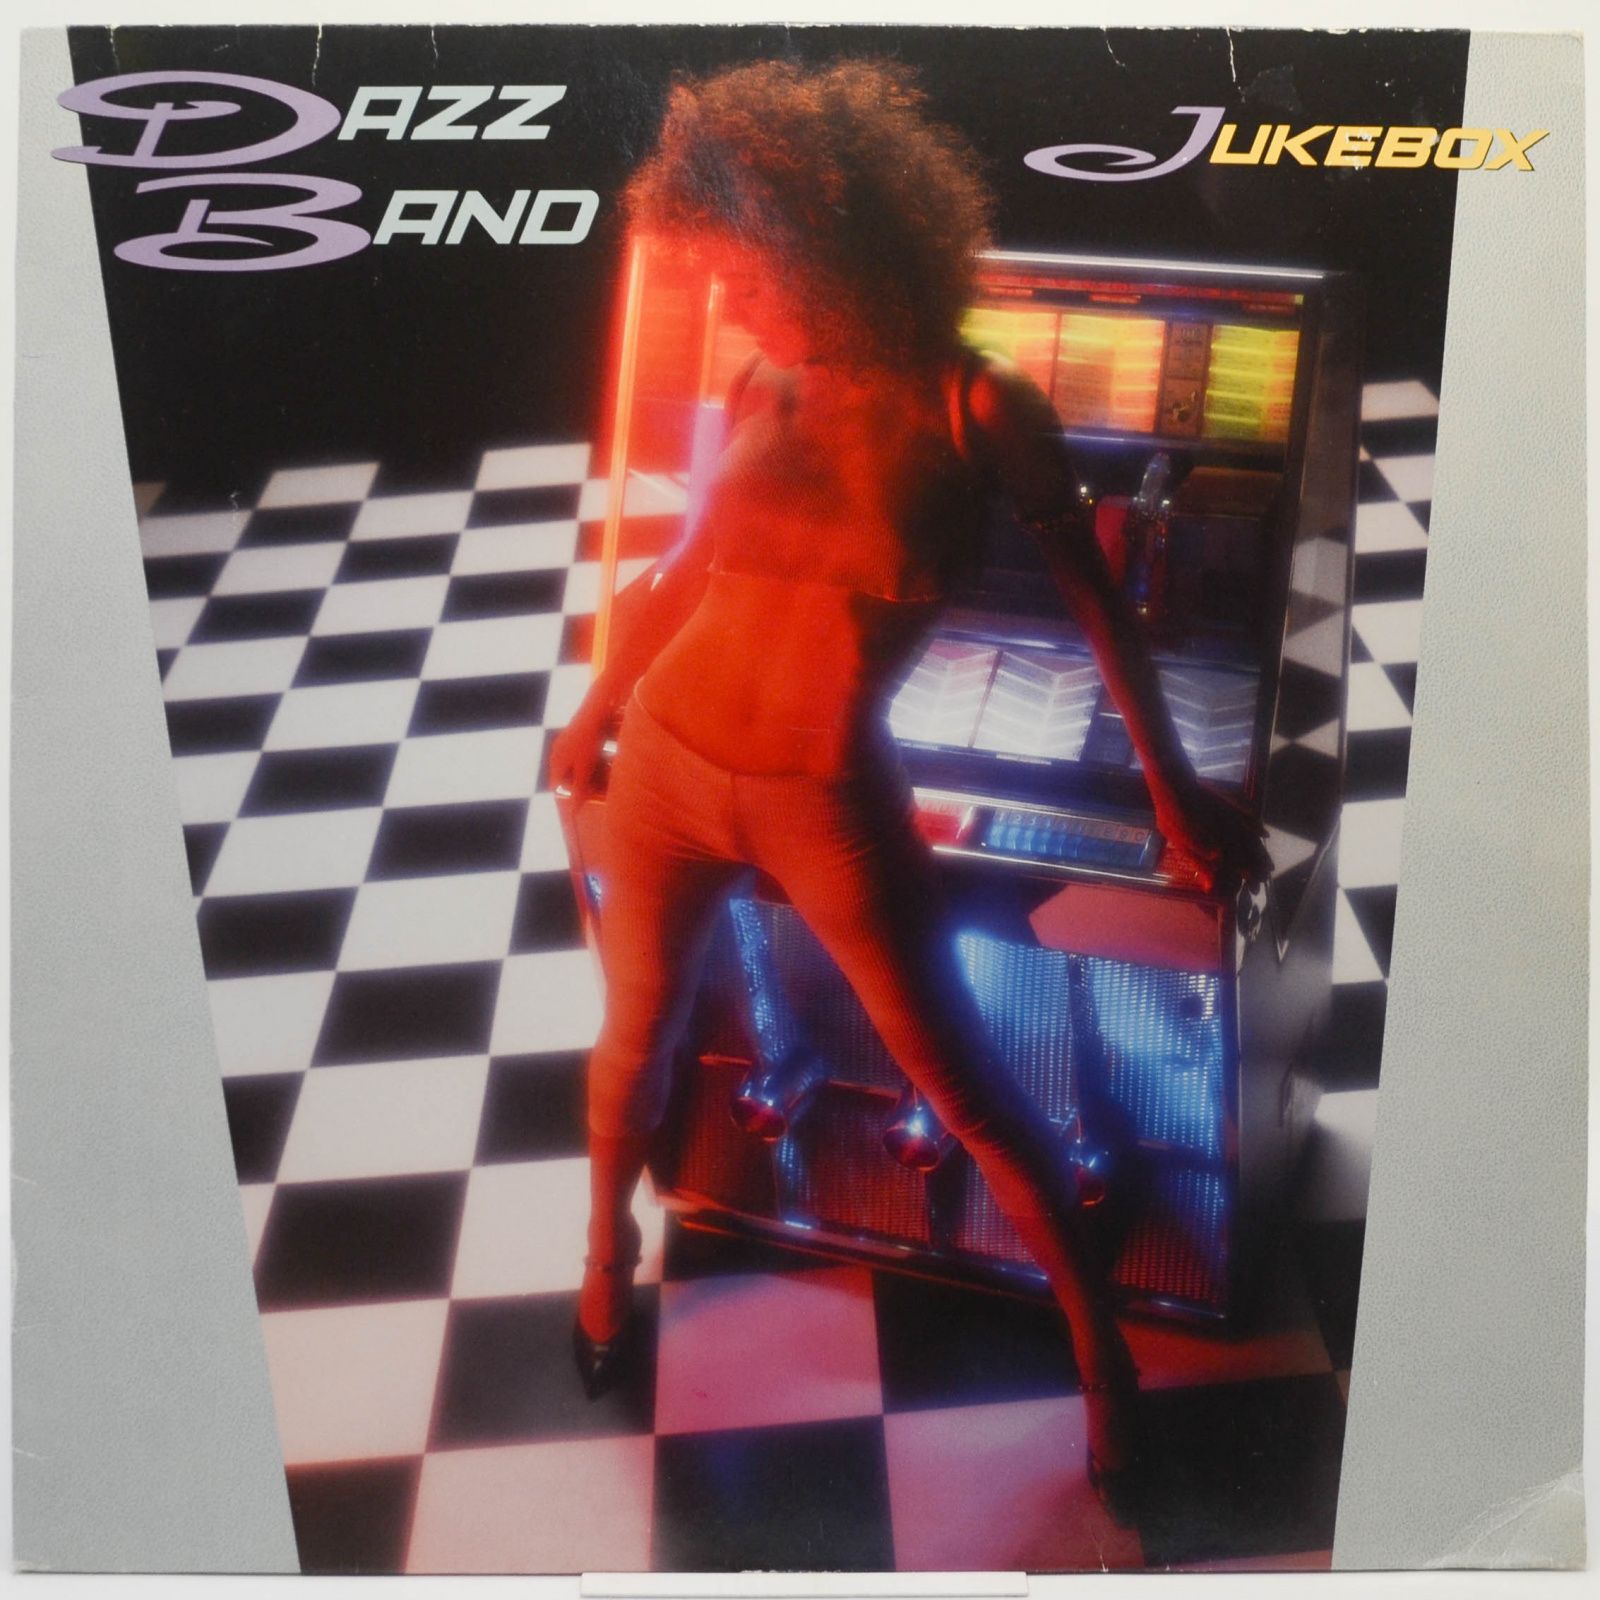 Dazz Band — Jukebox, 1984